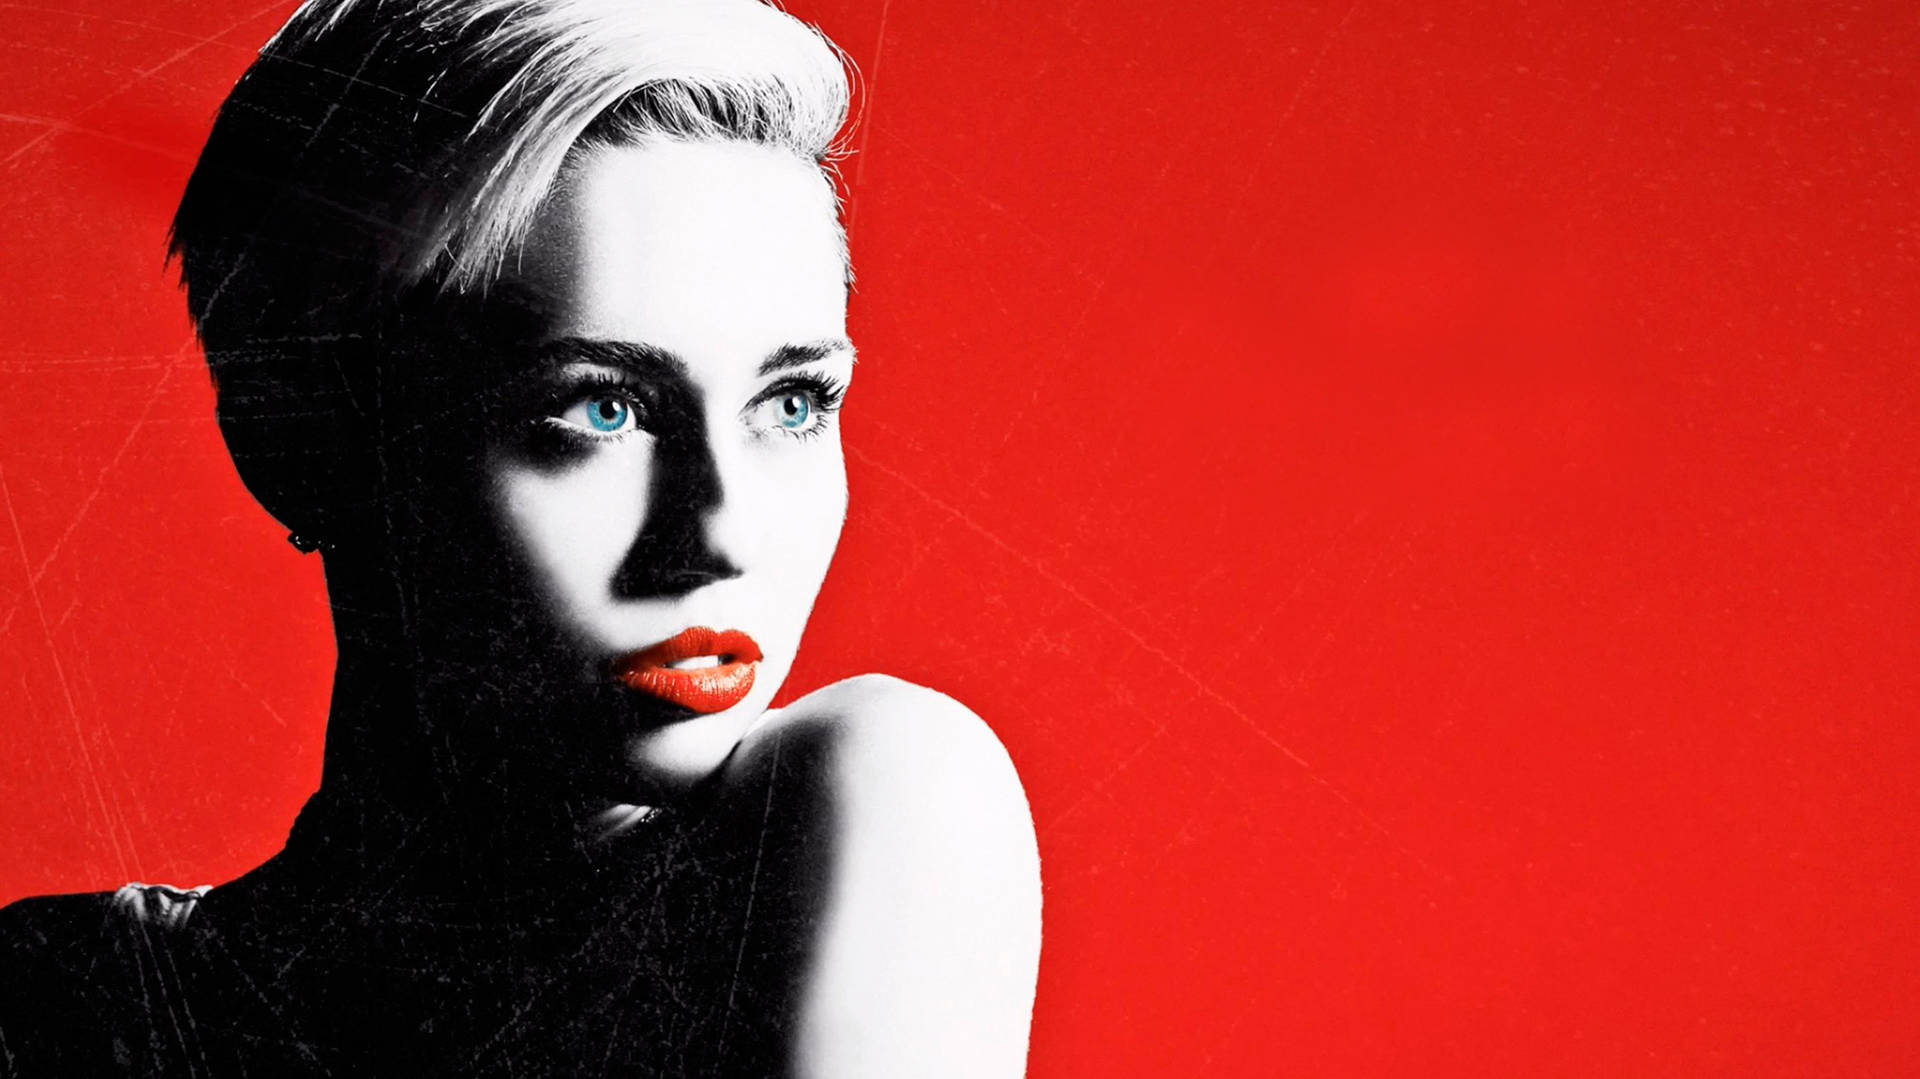 Miley Cyrus Fan Art In Red Background